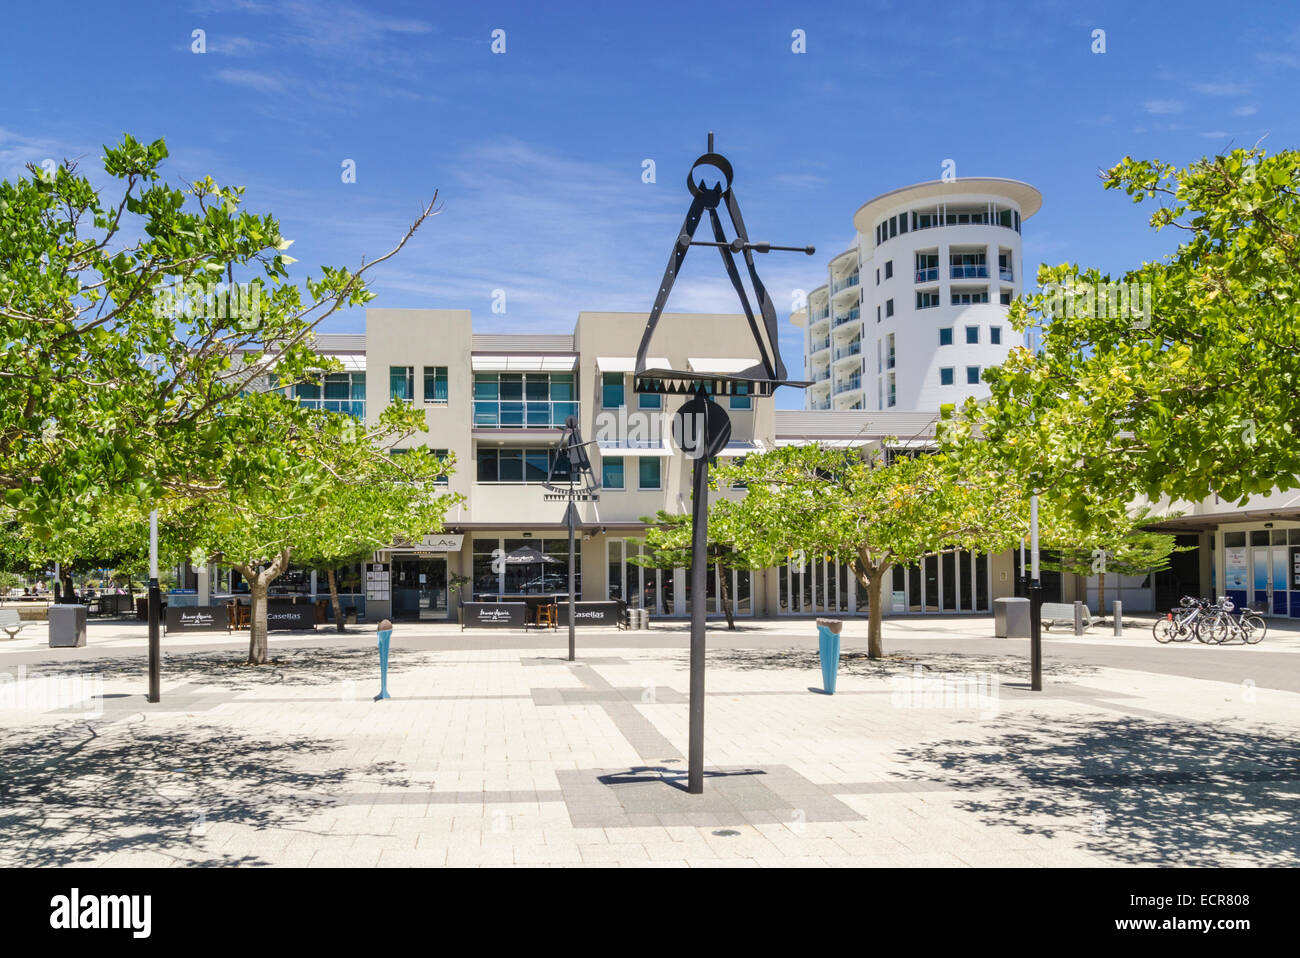 Market Square at Marlston Waterfront, Bunbury, Western Australia, Australia Stock Photo